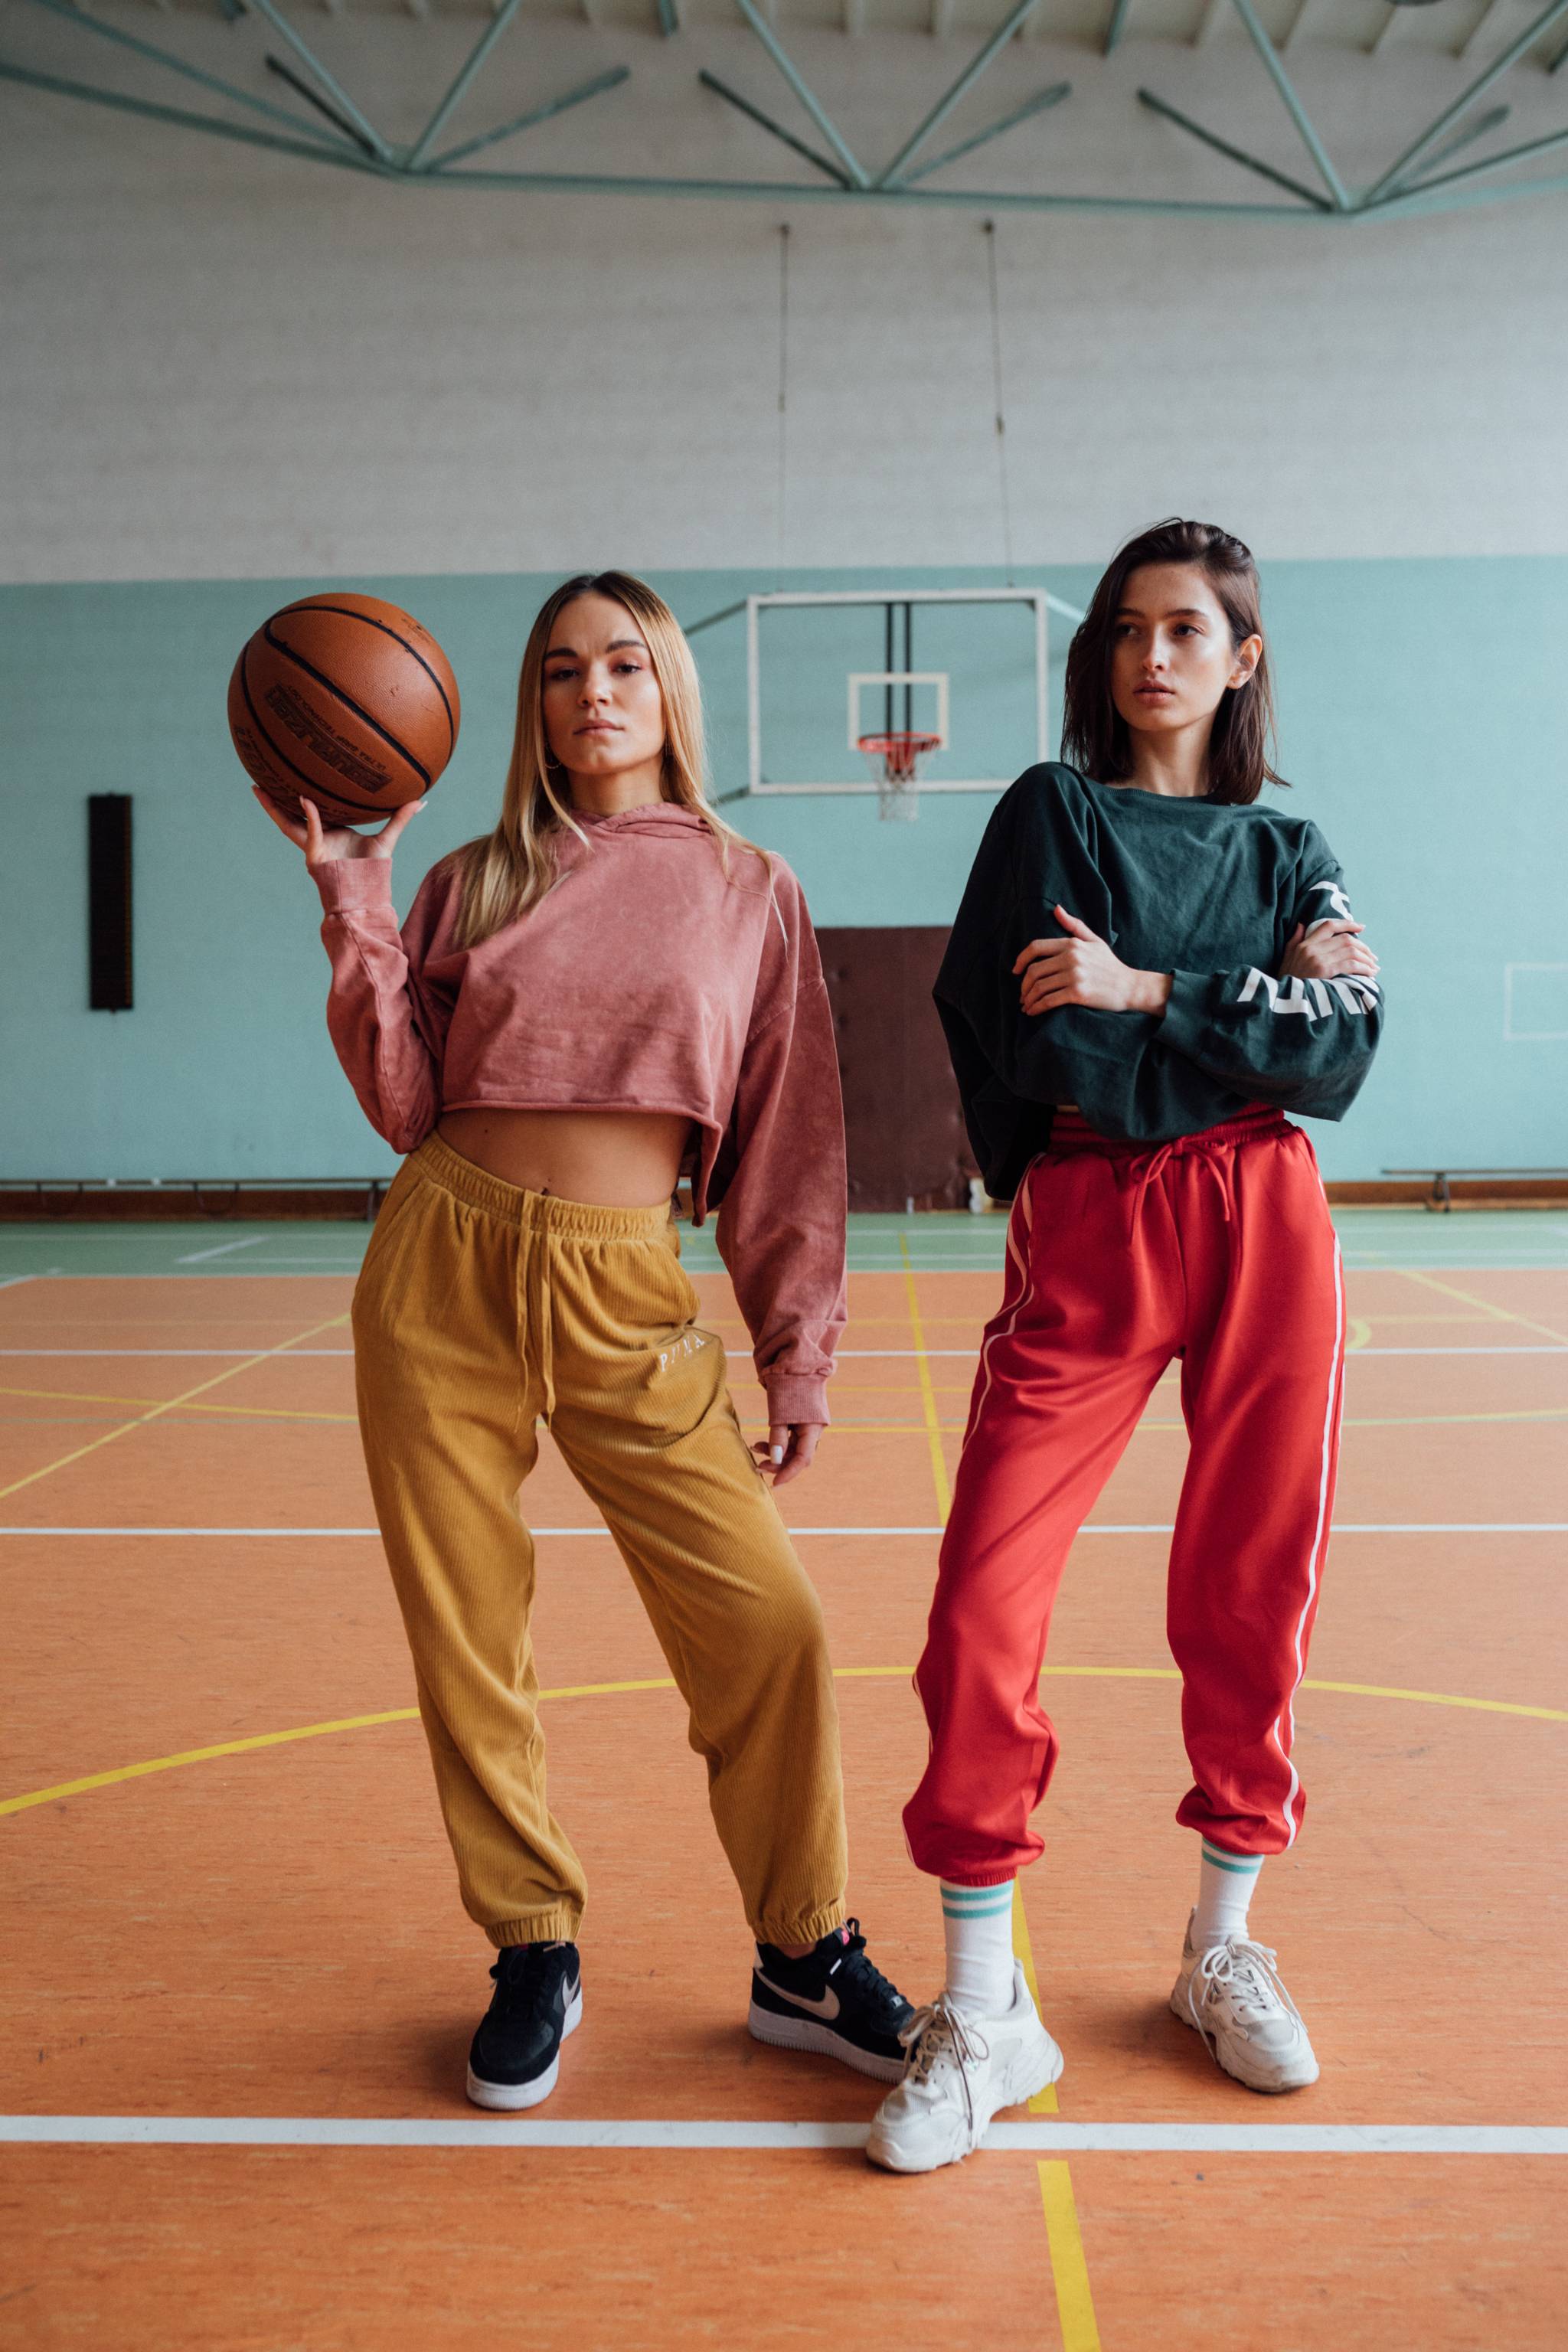 Nike deepens WNBA partnership to empower female athletes